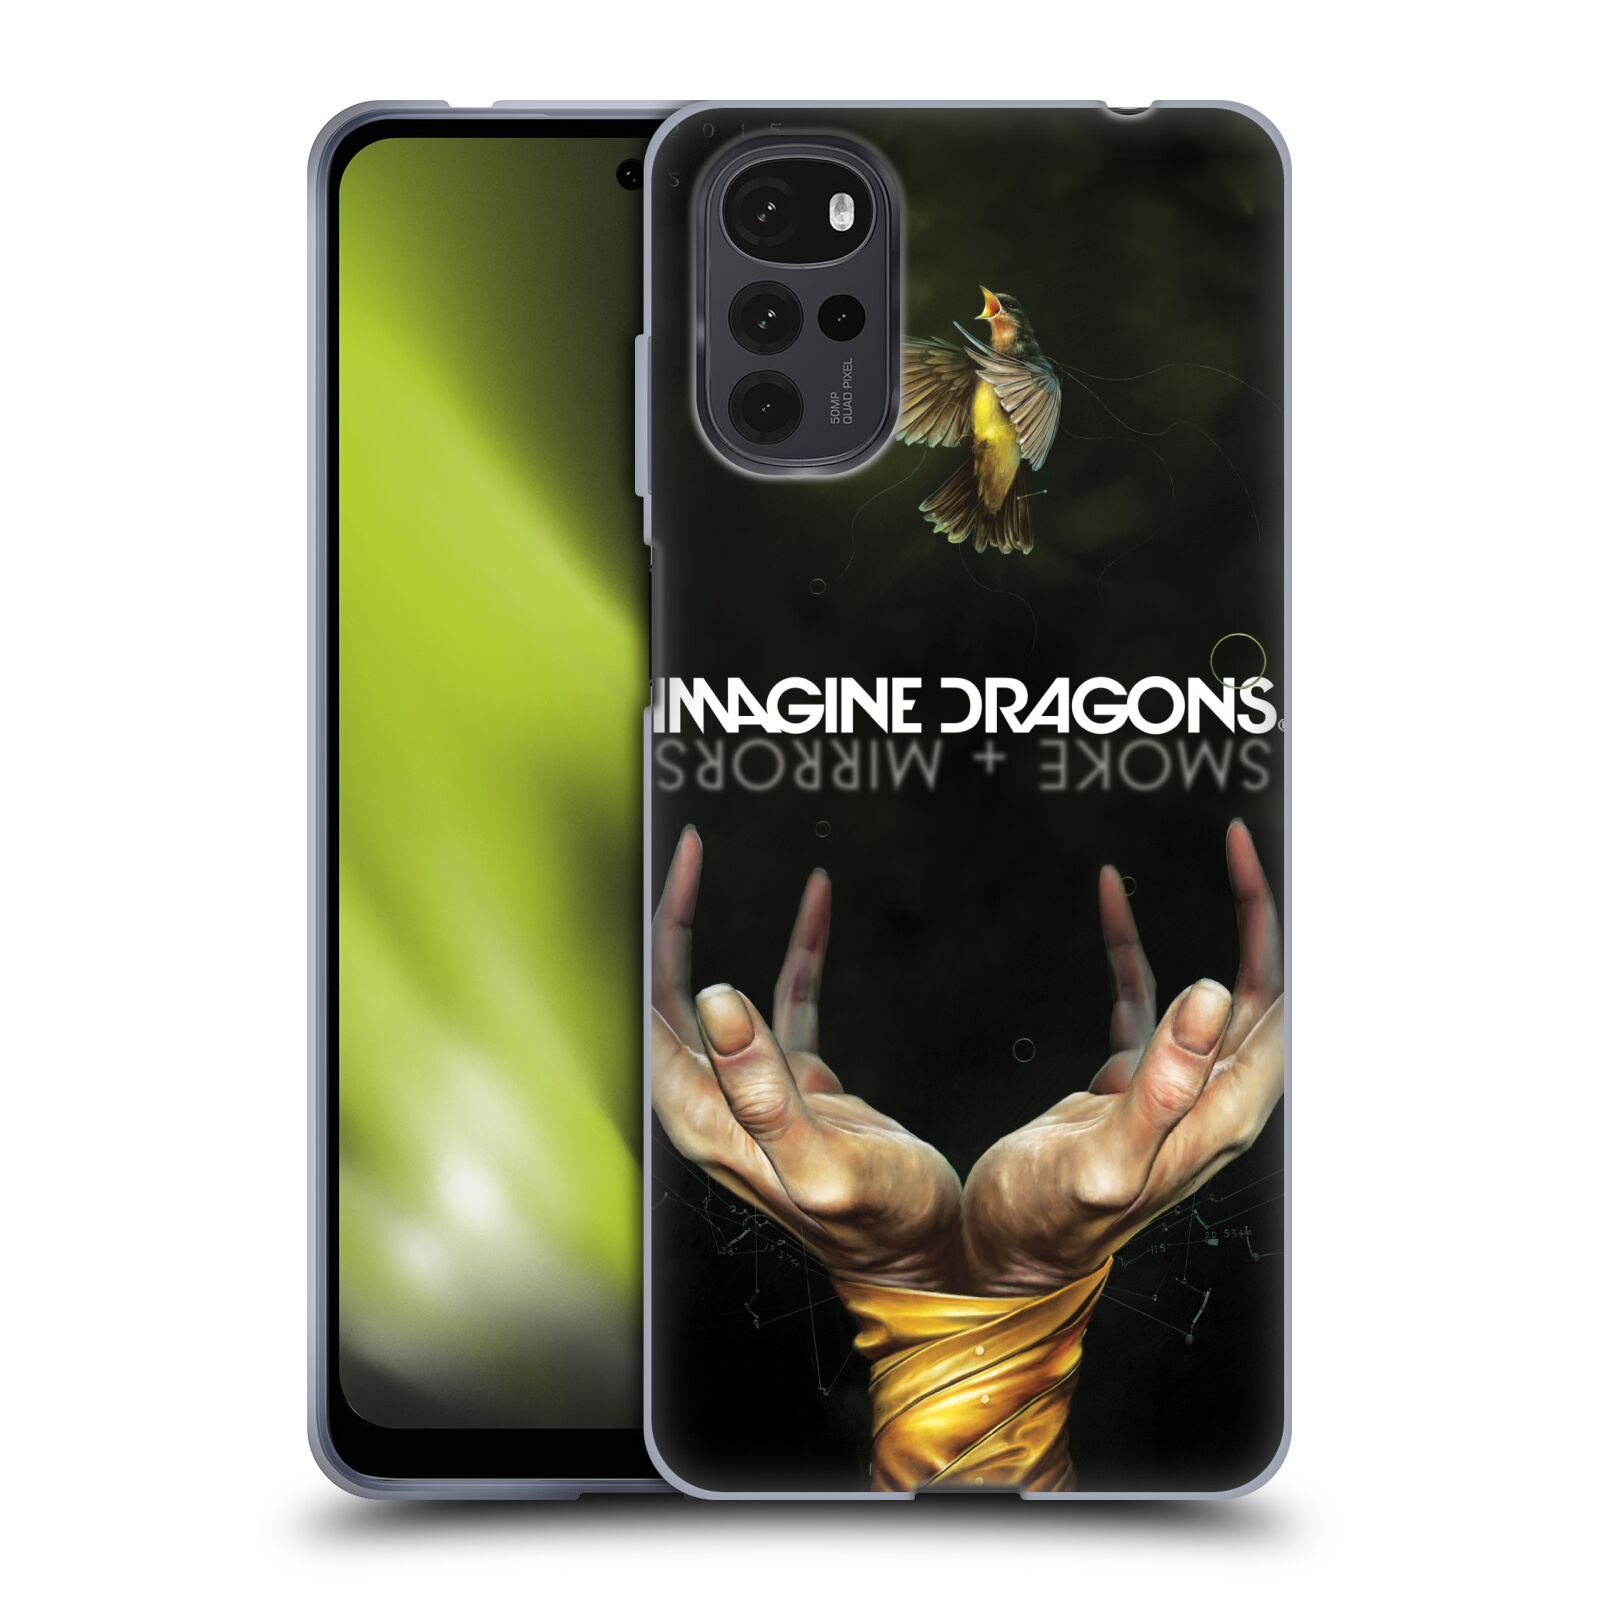 Silikonové pouzdro na mobil Motorola Moto G22 - Imagine Dragons - Smoke And Mirrors